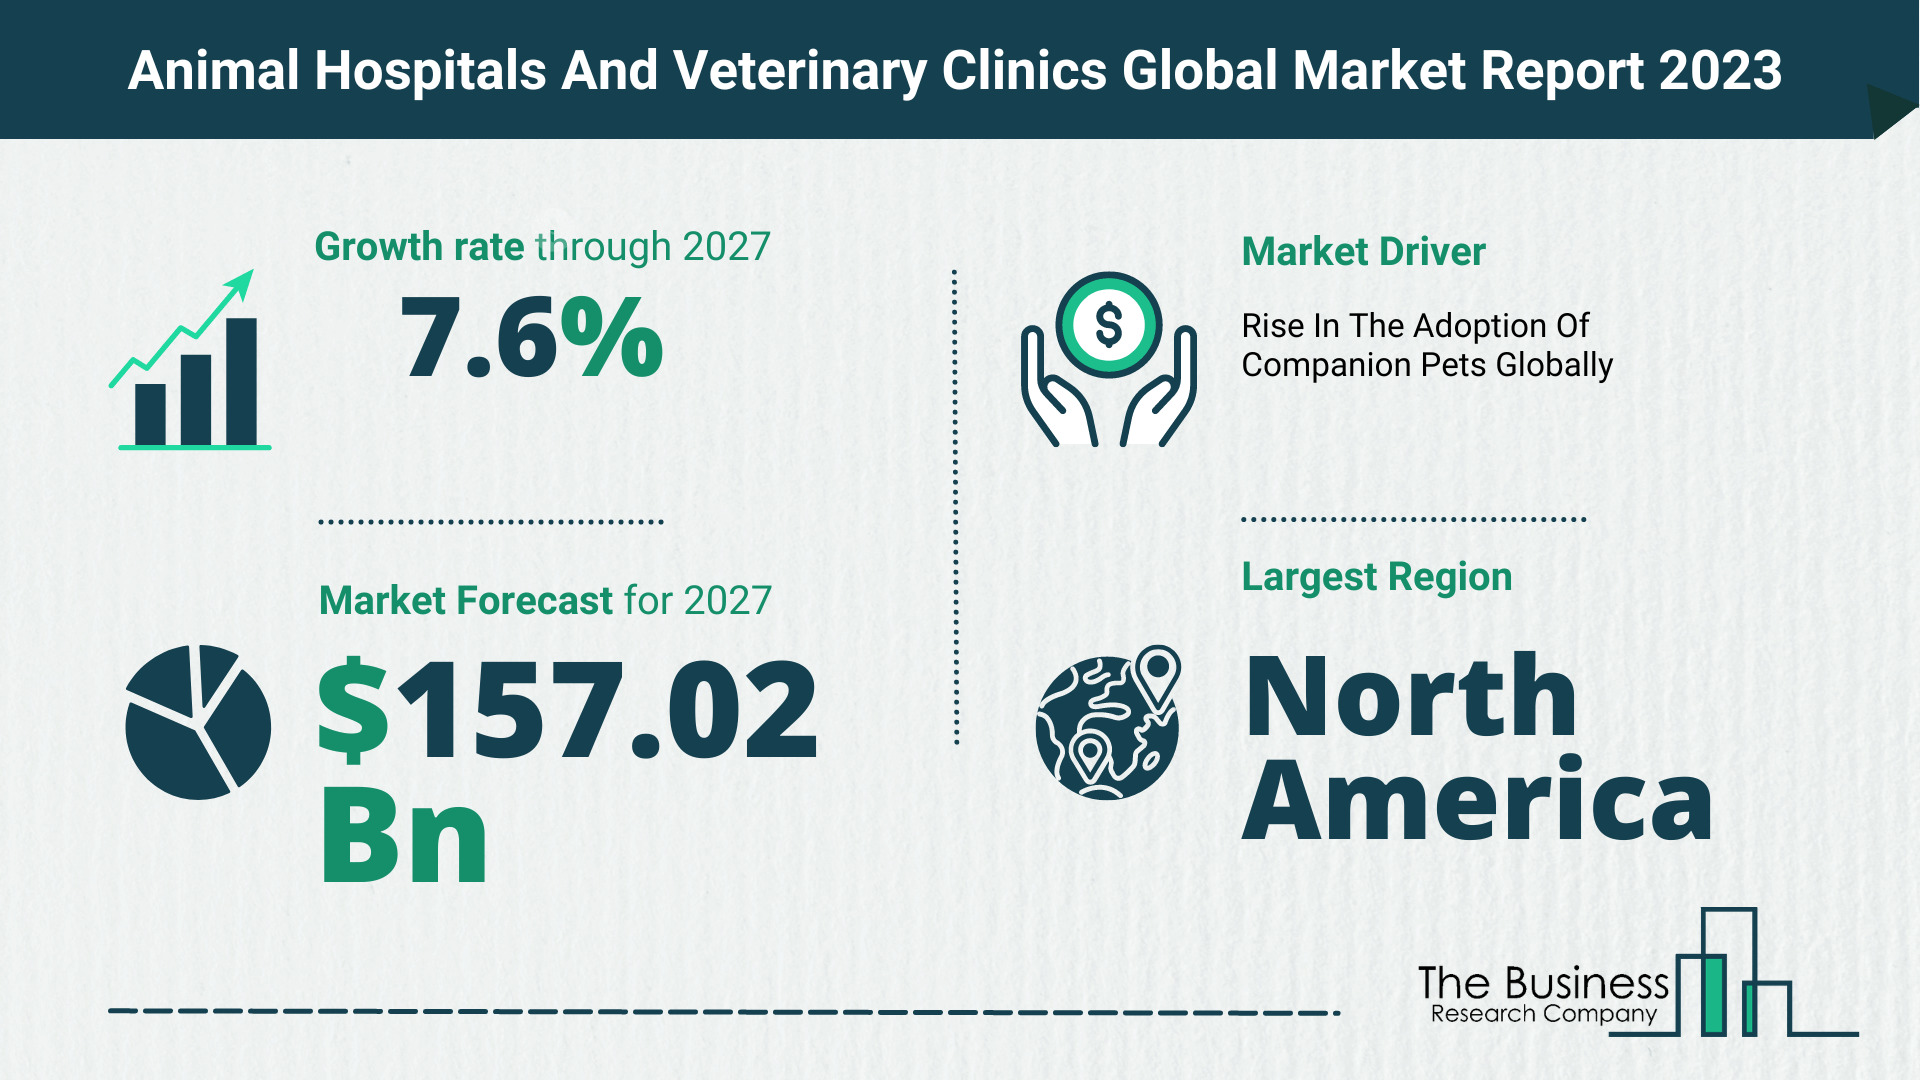 Global Animal Hospitals And Veterinary Clinics Market